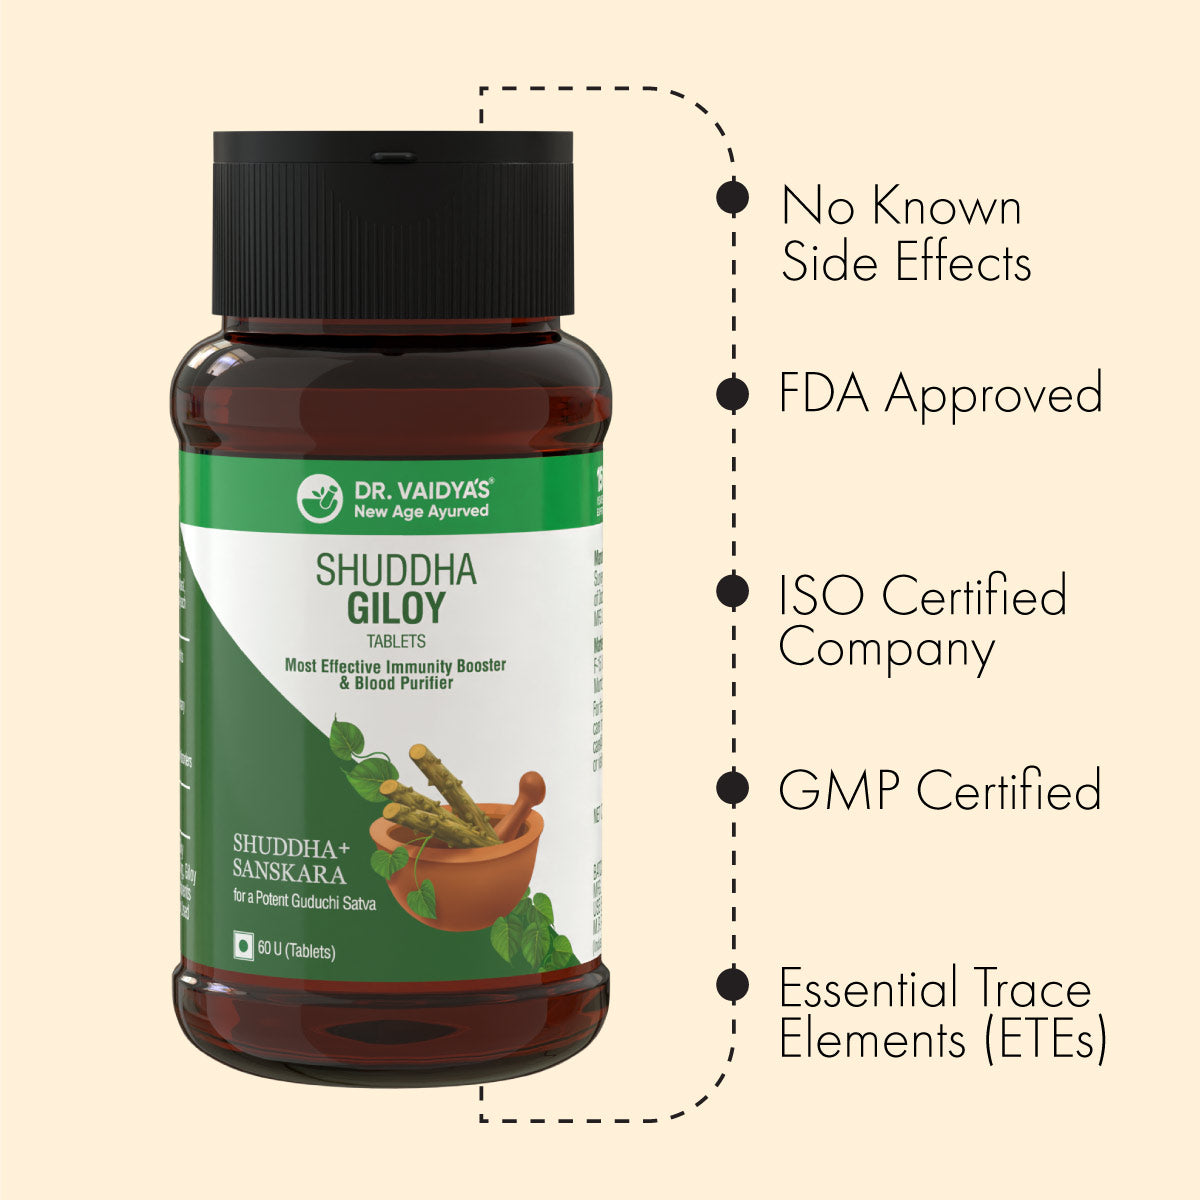 Shuddha Giloy: Most Effective Immunity Booster & Blood Purifier